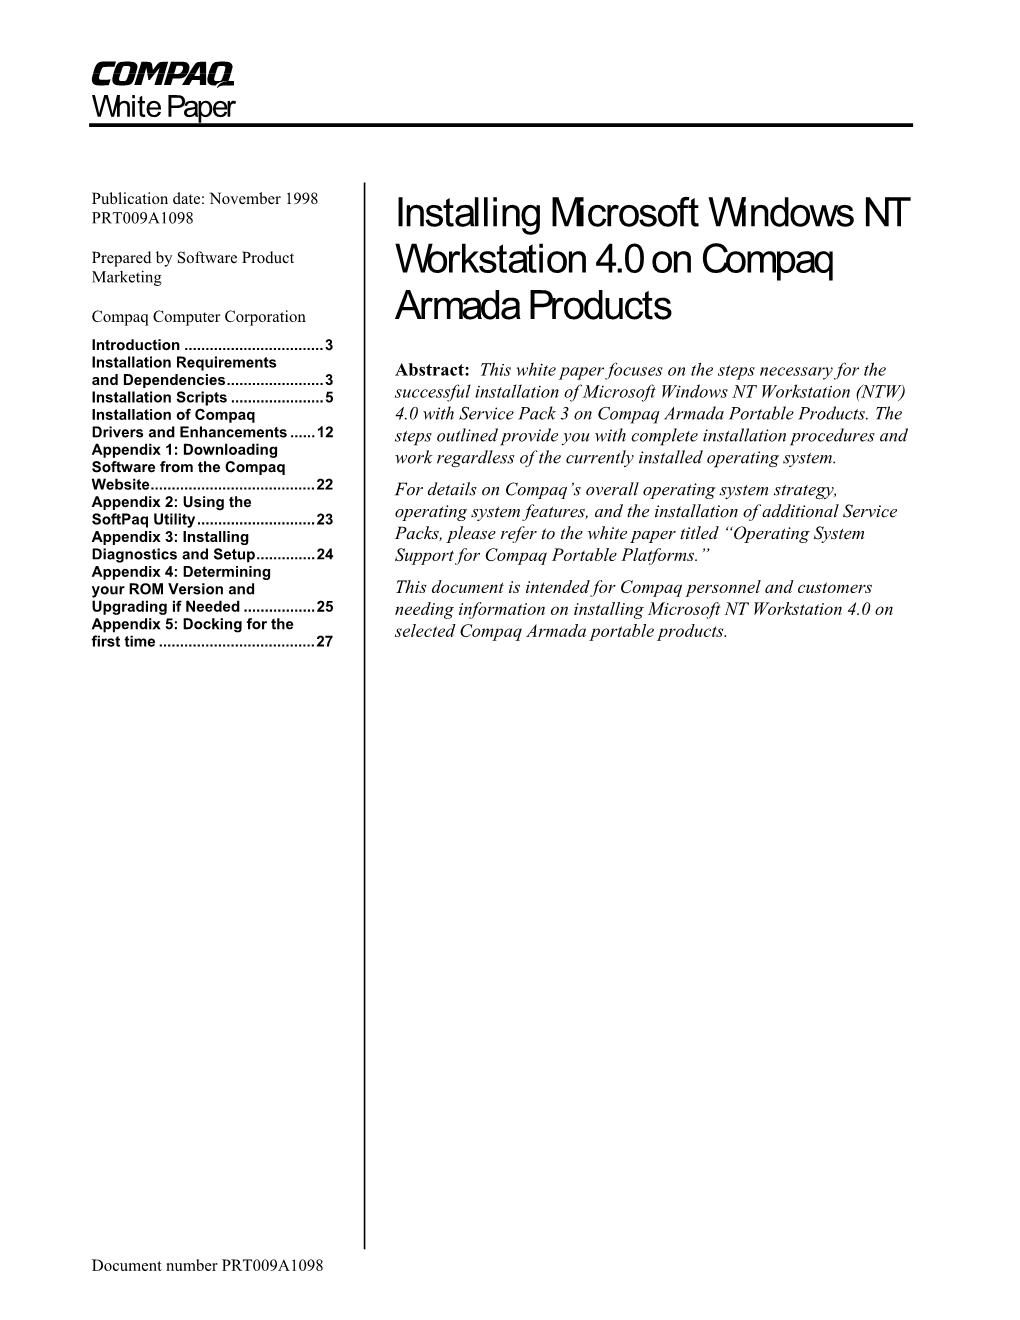 Installing Microsoft Windows NT Workstation 4.0 on Compaq Armada Products 2